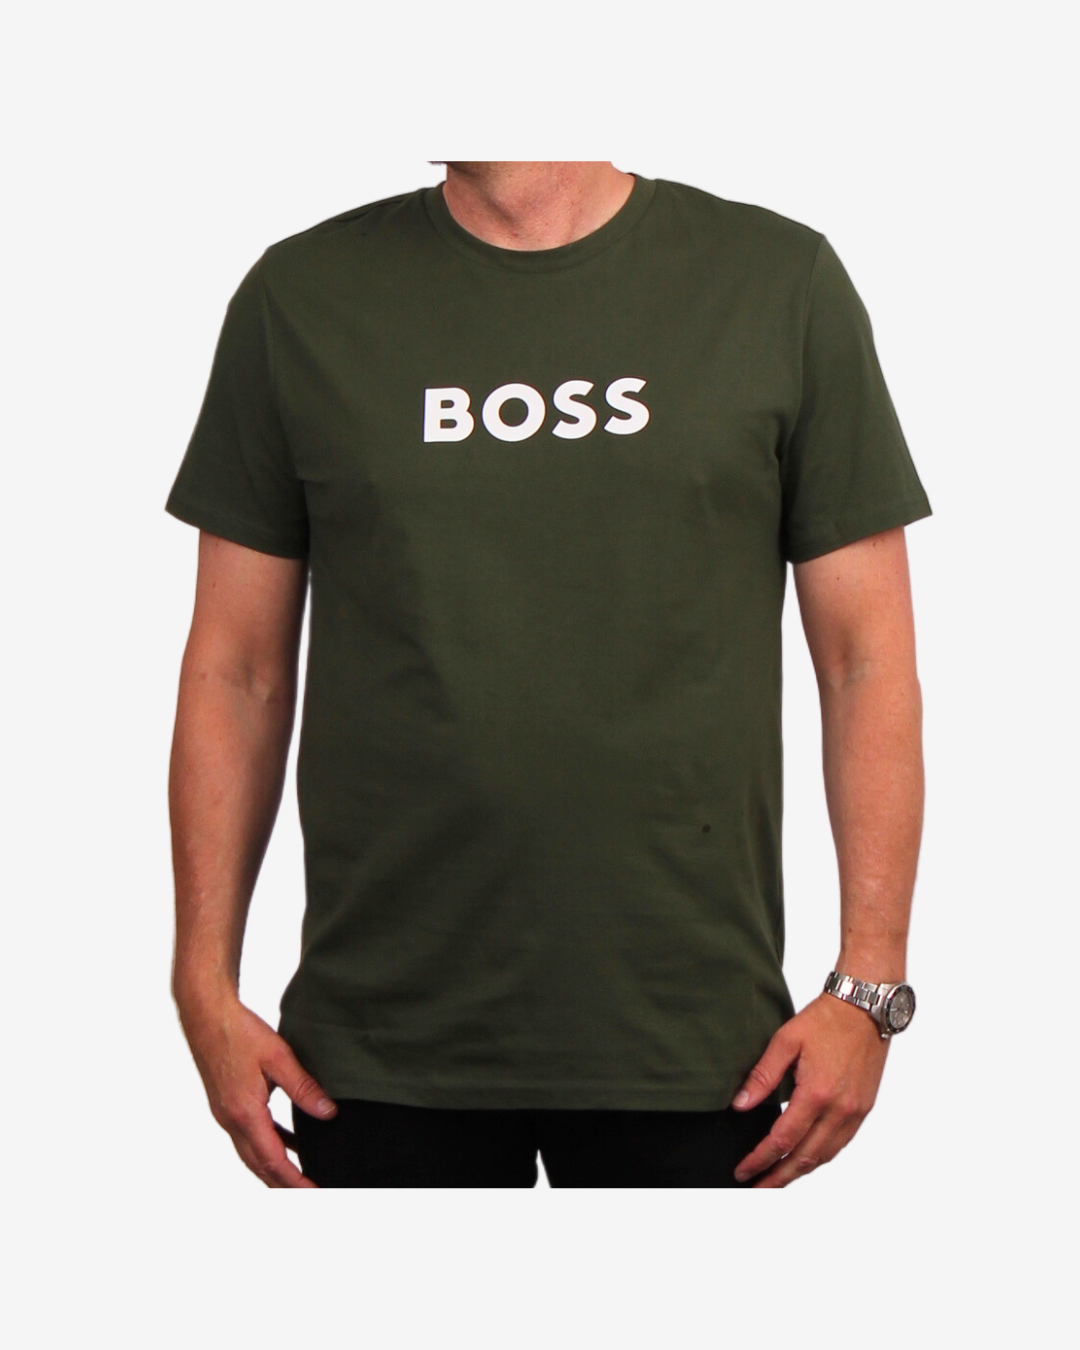 Se Hugo Boss T-Shirt i økologisk bomuld - Grøn - Str. M - Modish.dk hos Modish.dk